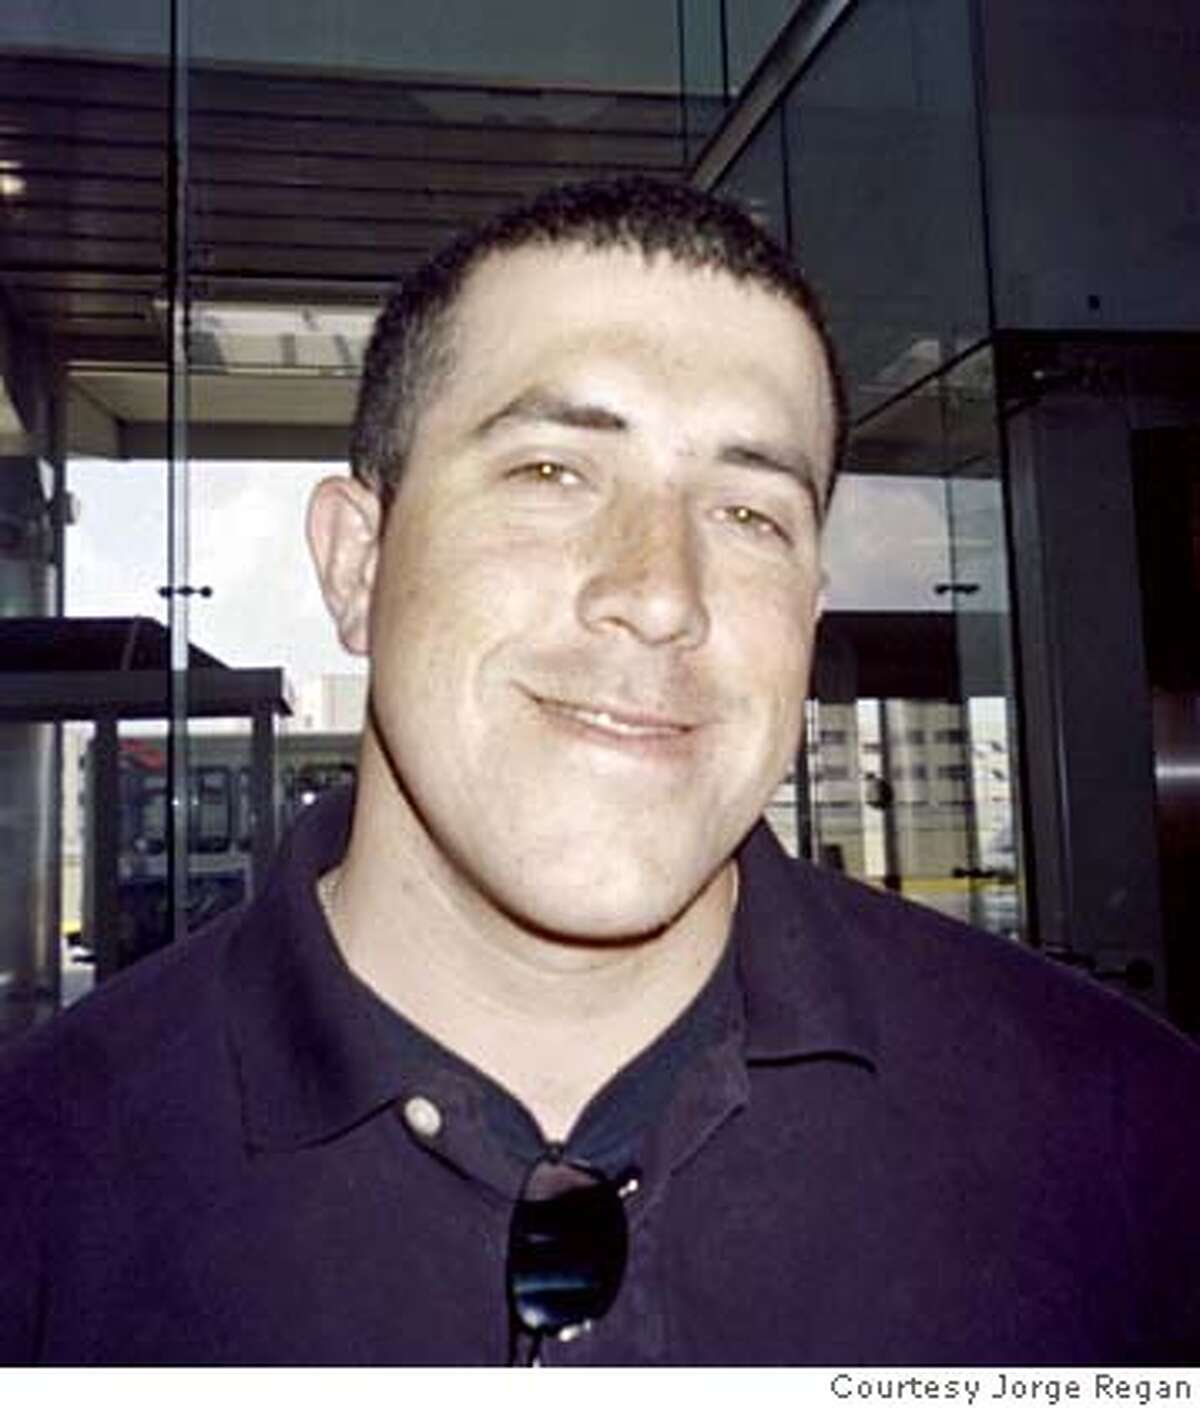 Jorge Regan in Oklahoma City, before his deployment in Iraq.